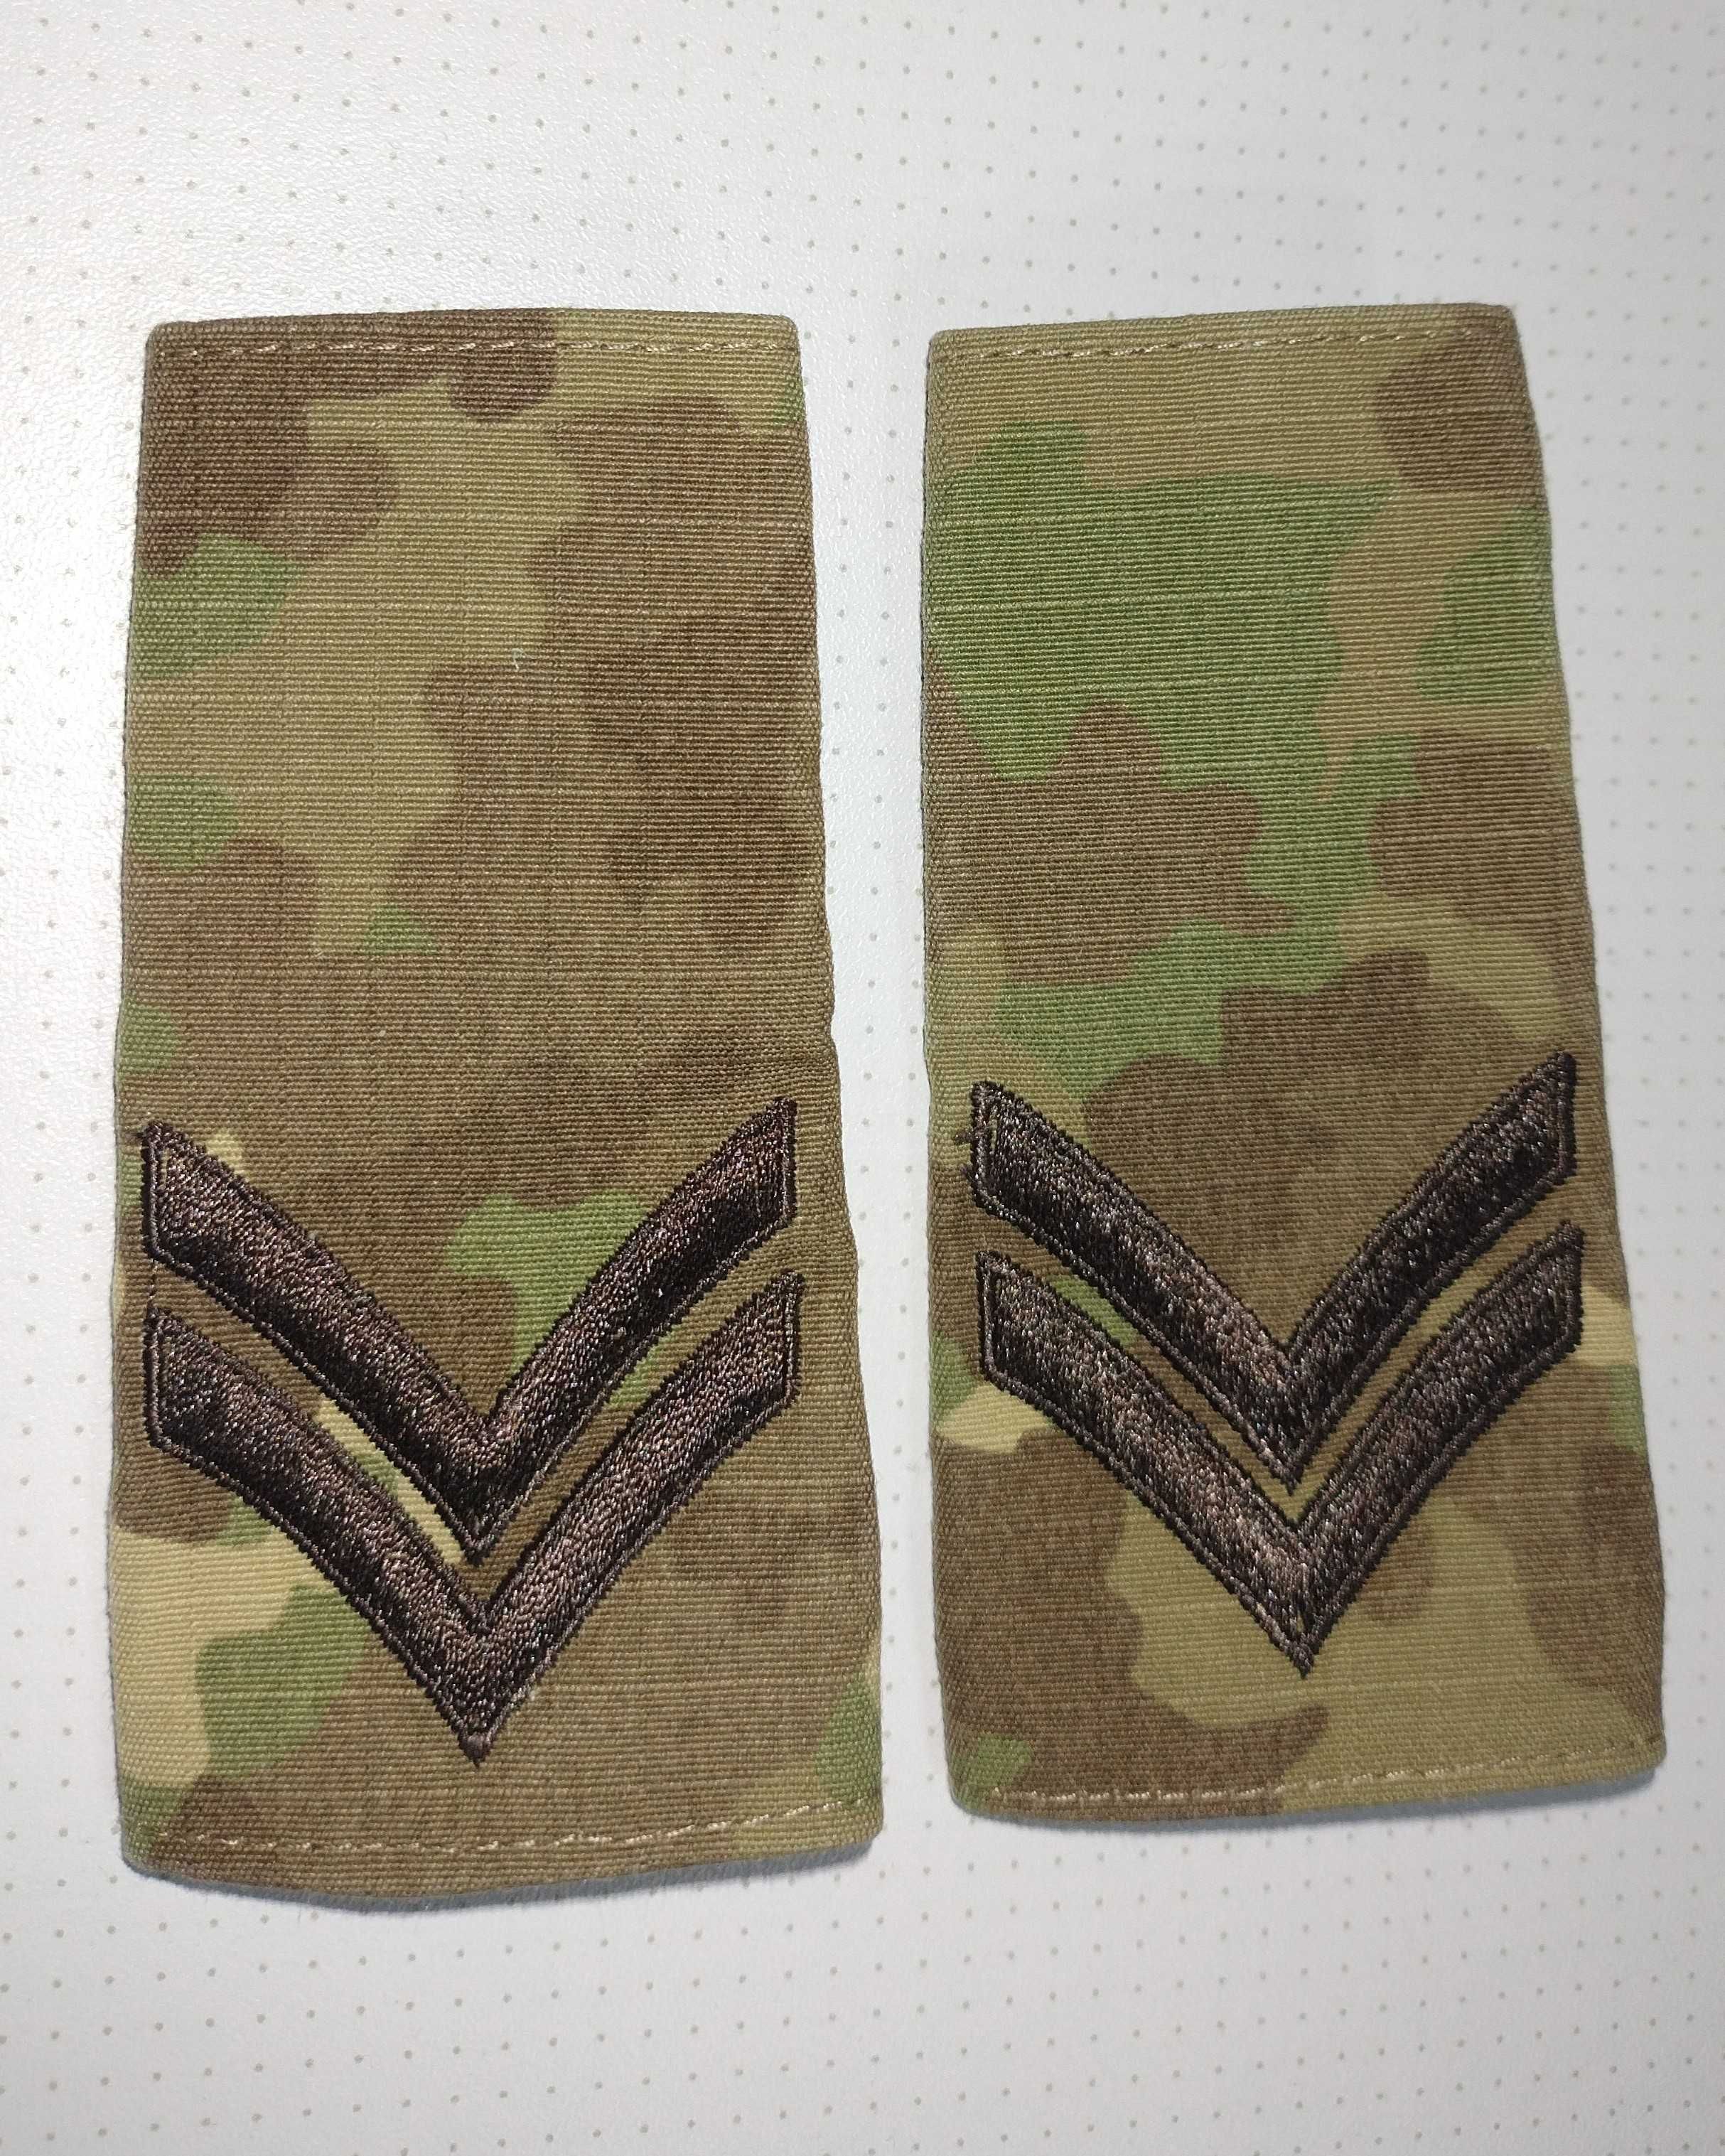 Grade Militare Combat Caporal Clasa III